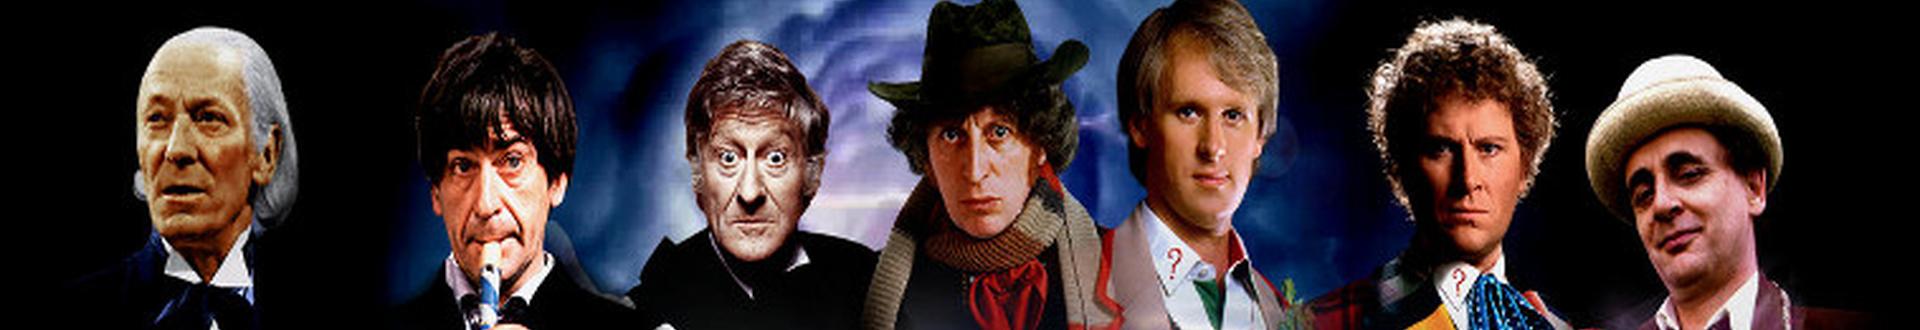 Image illustrative de Doctor Who